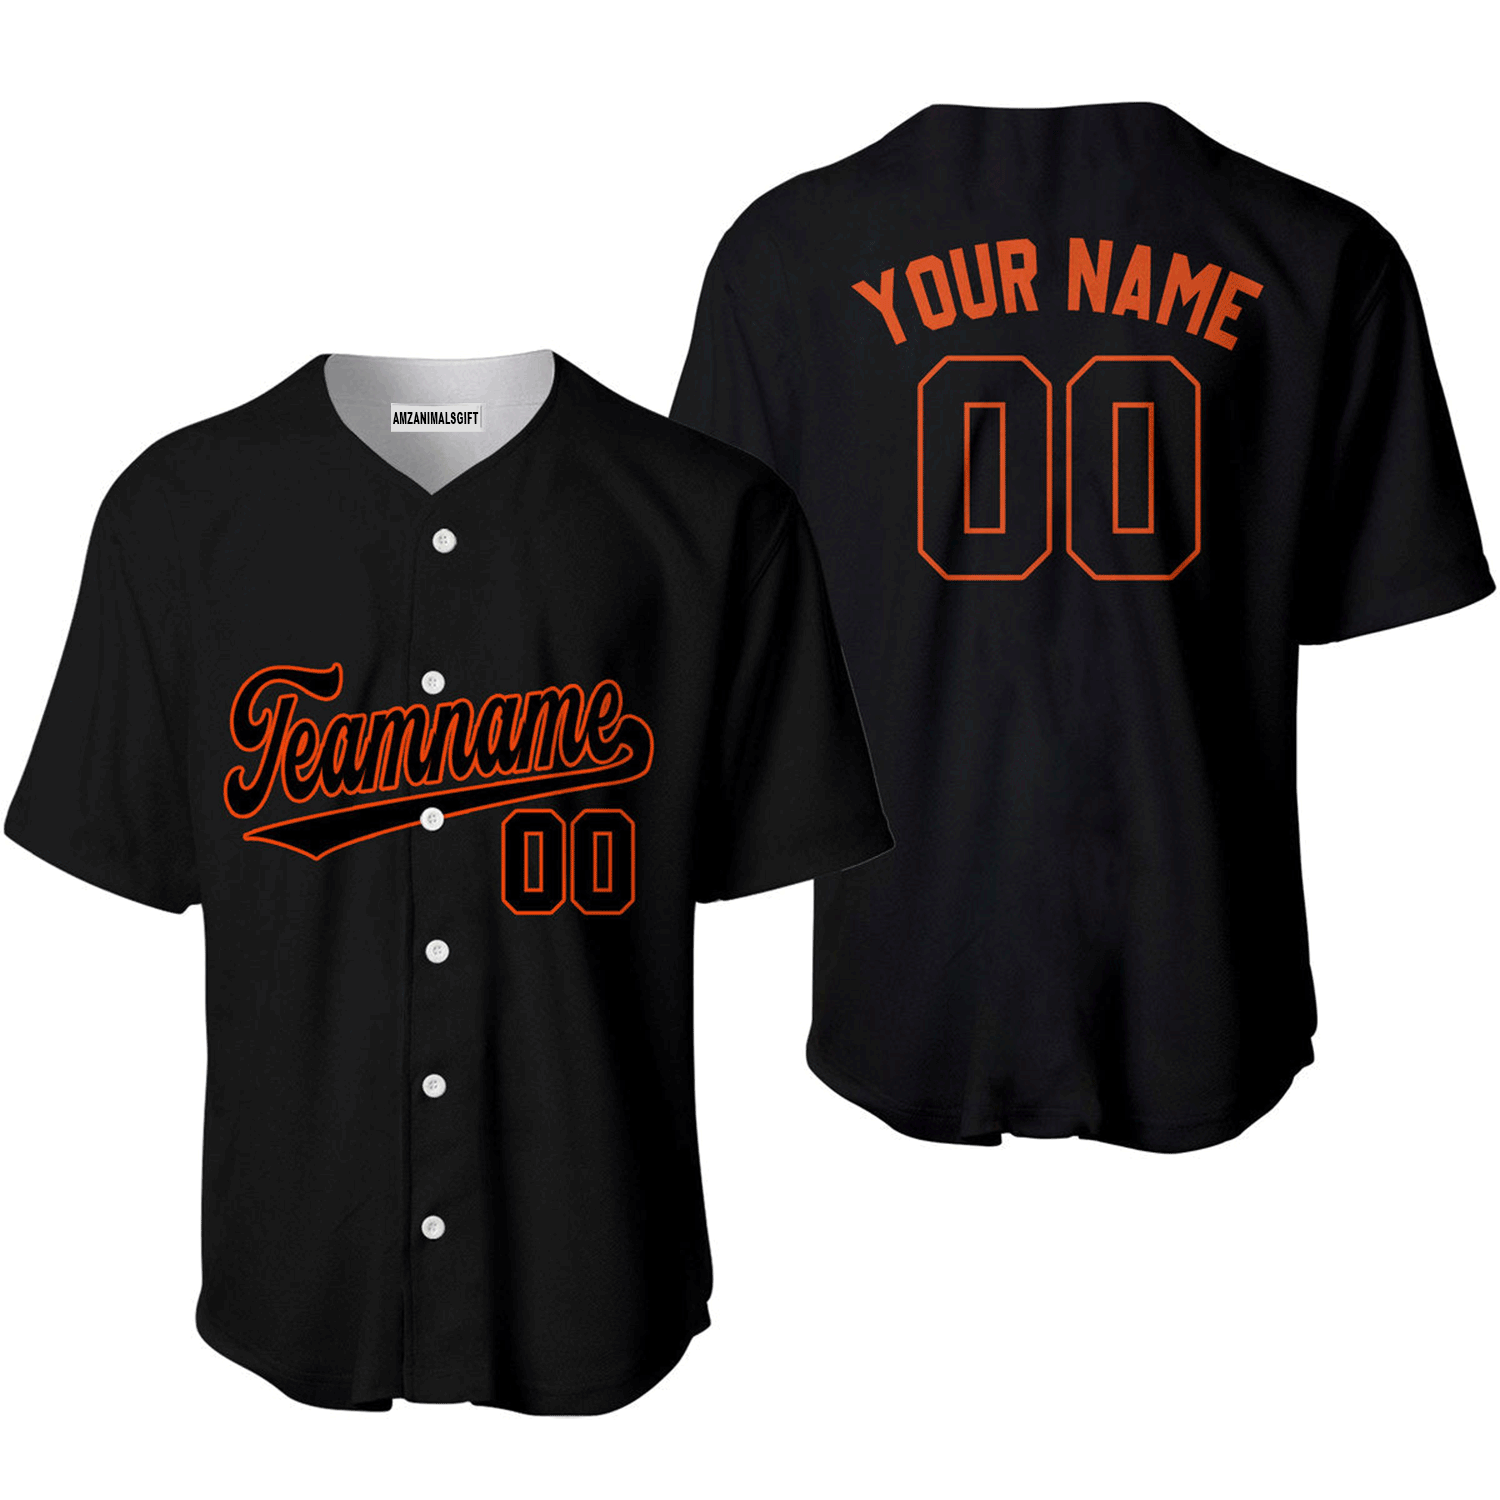 Customized Baseball Jersey Shirt - Personalized Black Orange Baseball Jersey Shirt For Men & Women, Perfect Gift For Baseball Lover